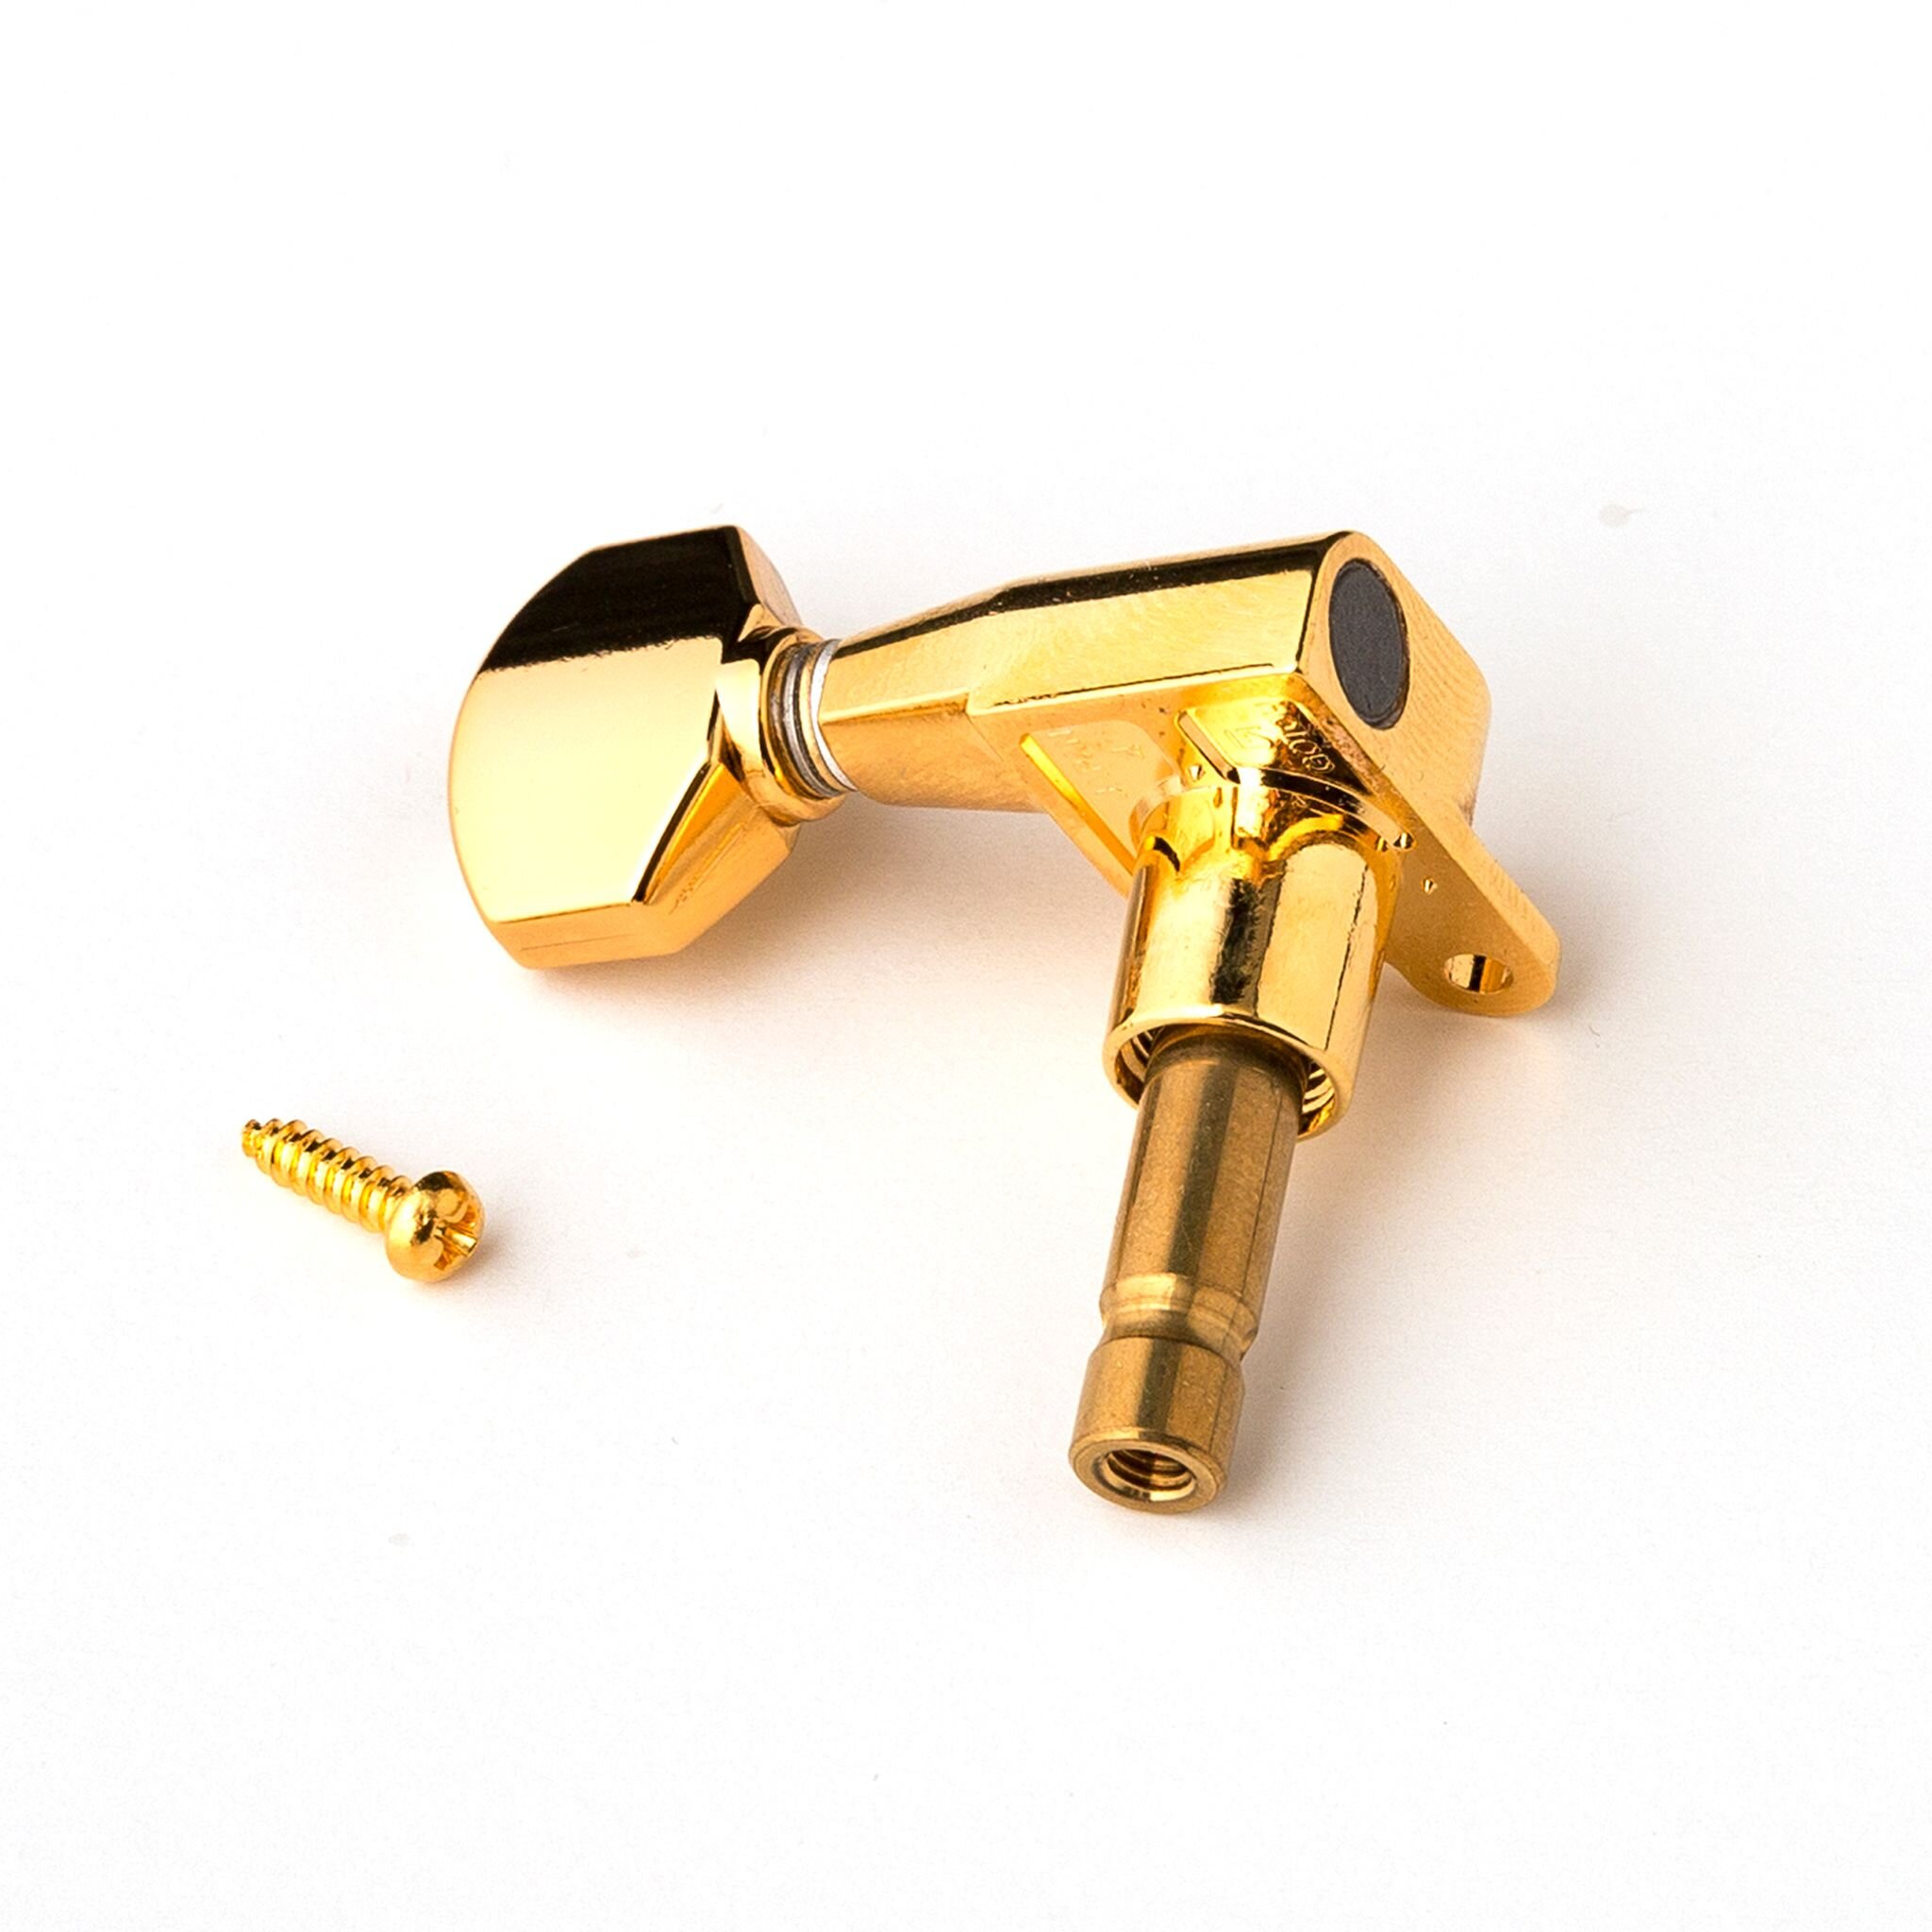  101675::G:002  ACC-4387  Phase II Locking Tuner Bass Side Gold 